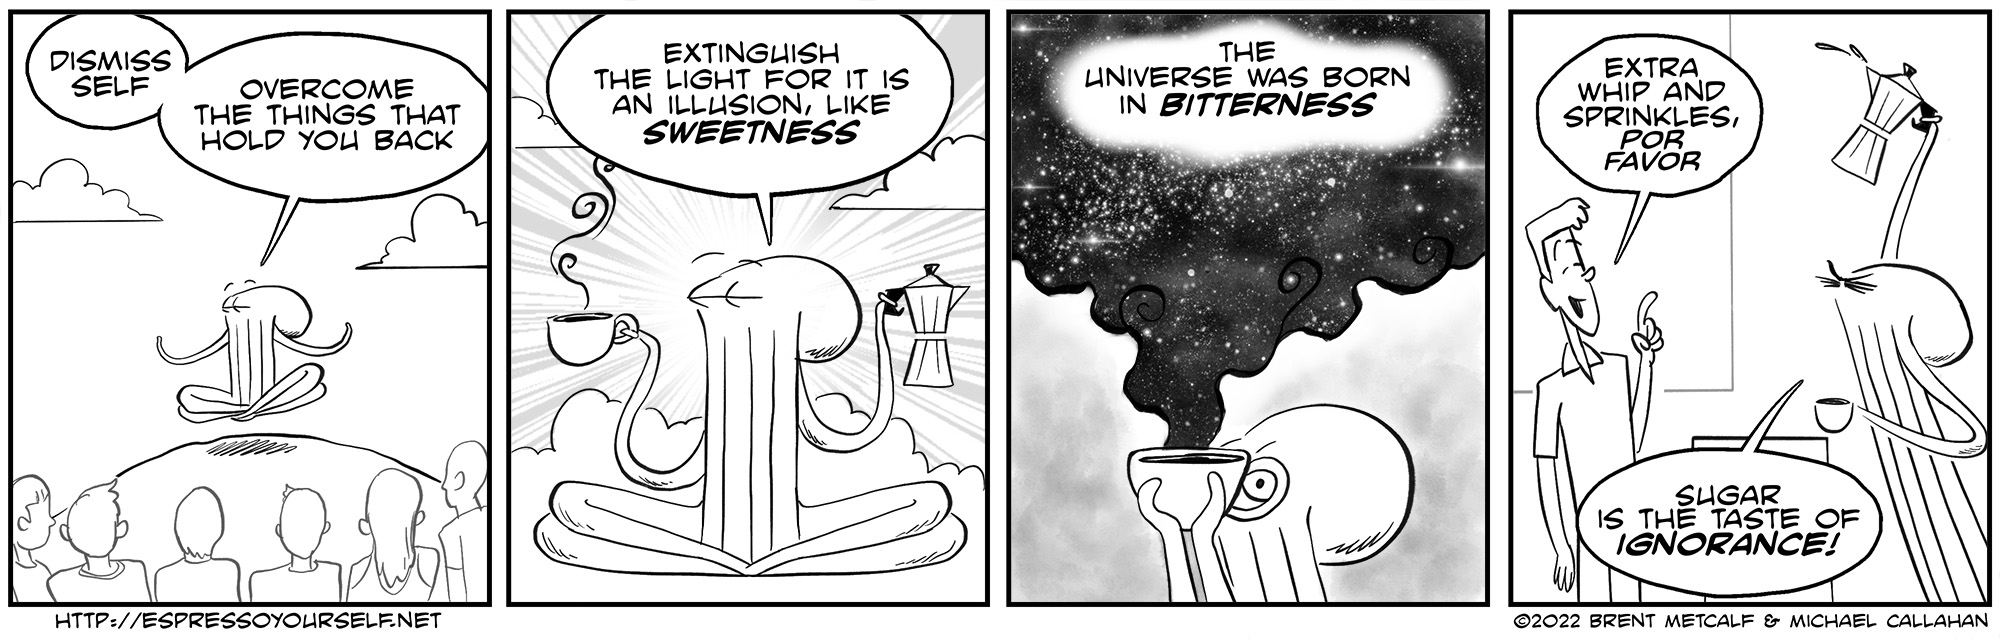 Bitter Universe